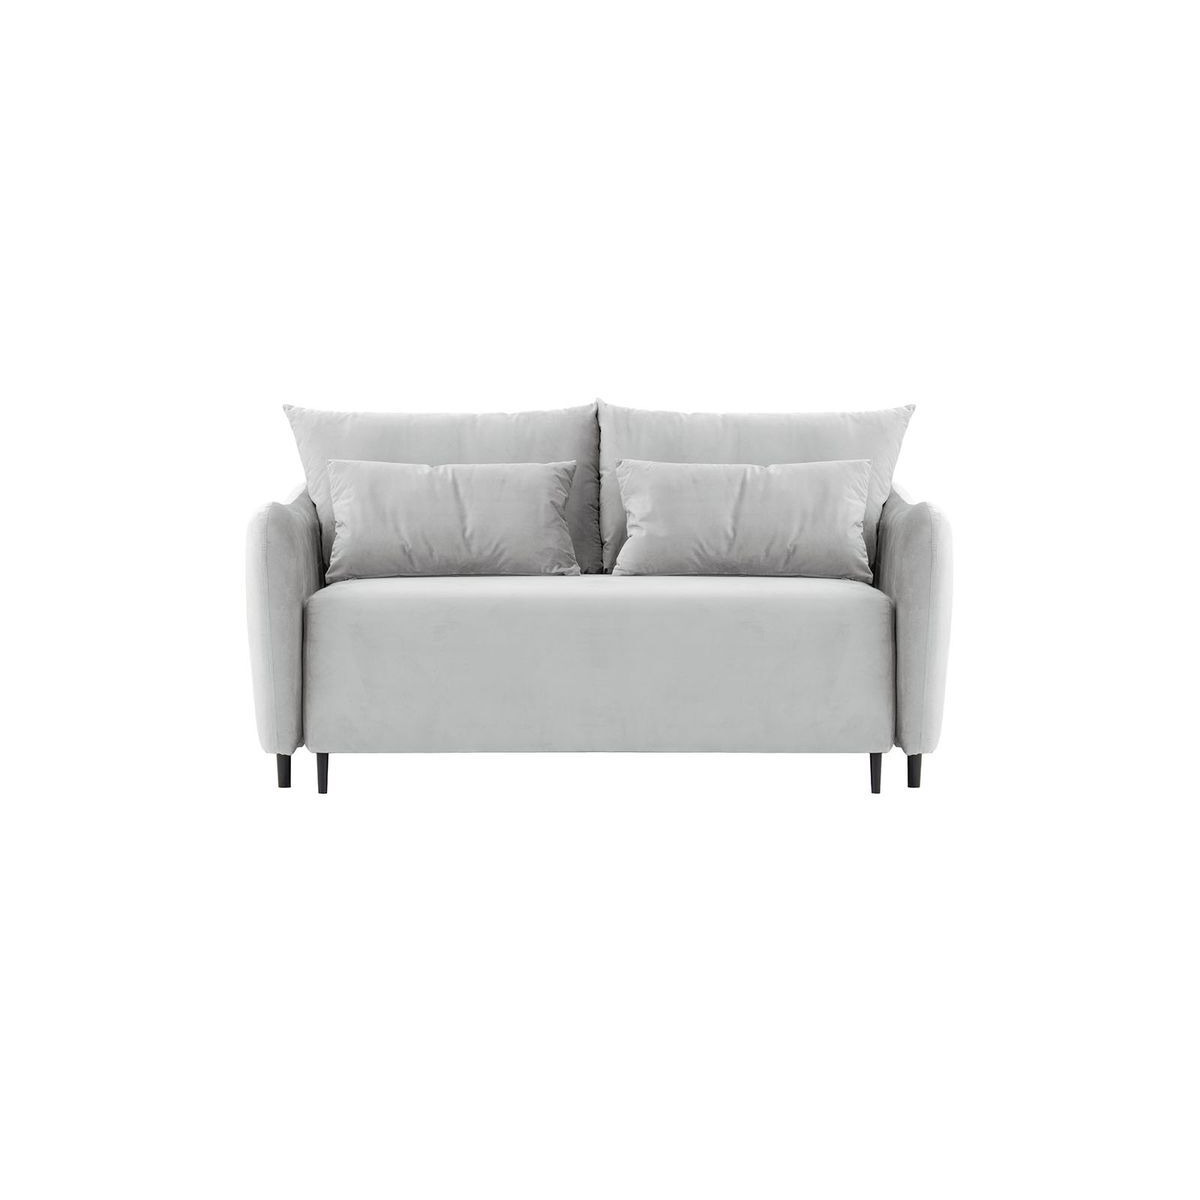 Zoya 2 seater Sofa Bed, silver, Leg colour: black - image 1